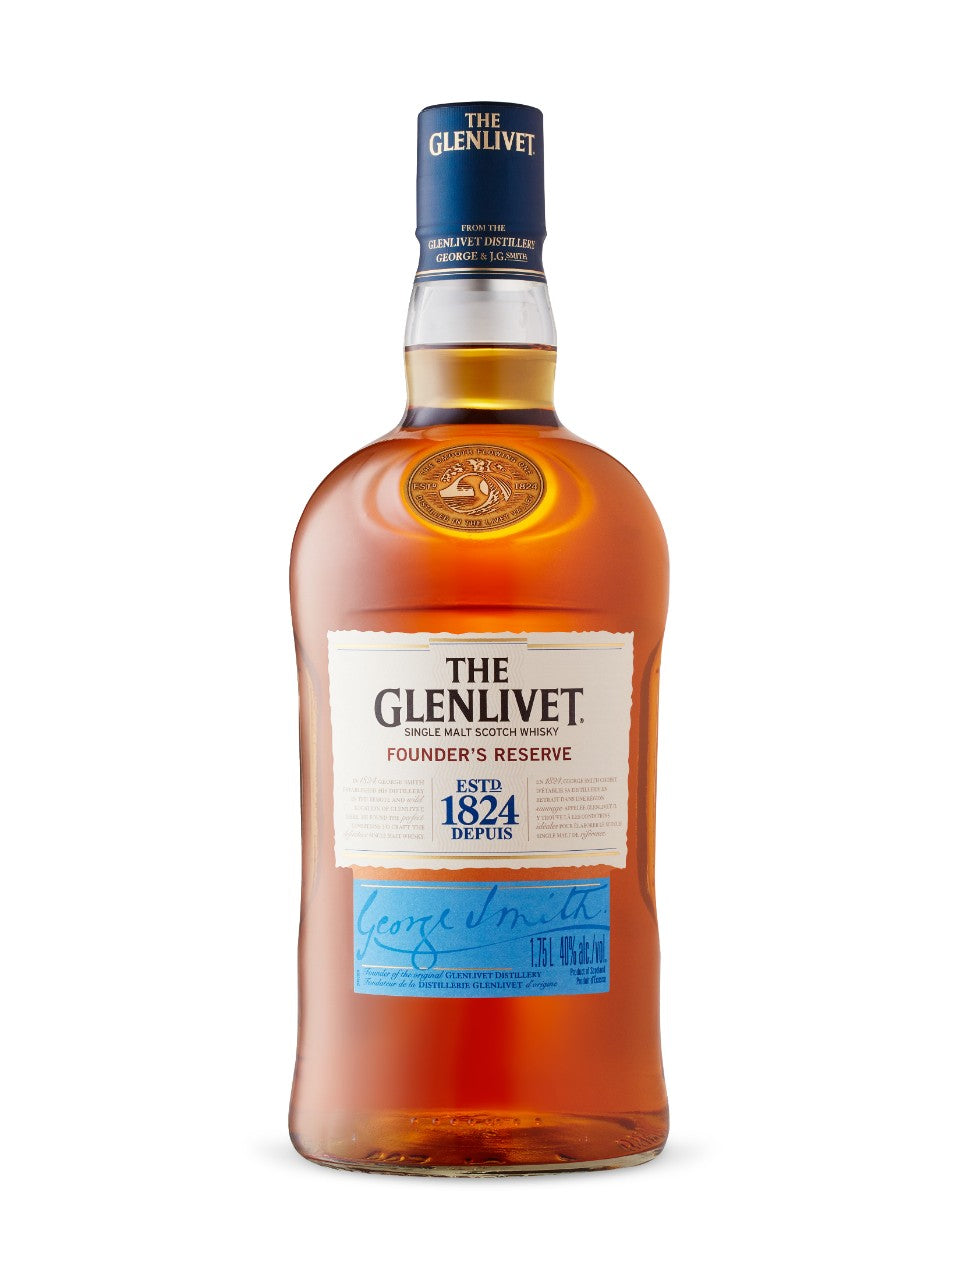 The Glenlivet Founder's Reserve Scotch Whisky 1750 ml bottle